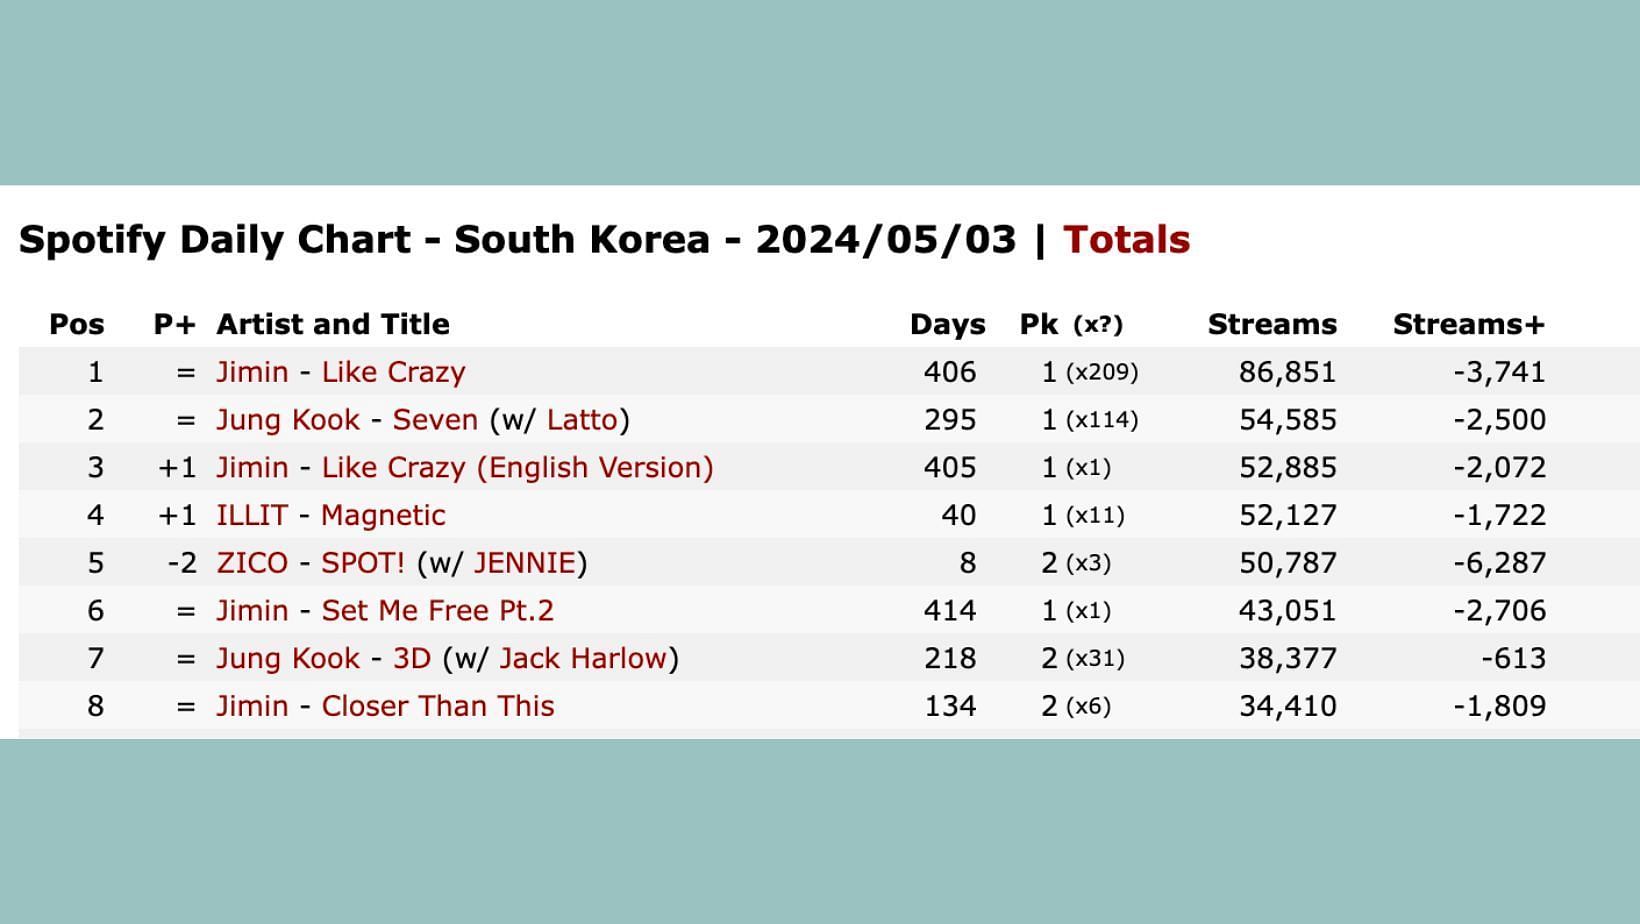 BTS Jimin spends over 400 days on Spotify&#039;s South Korea chart. (Image via Kworb website)